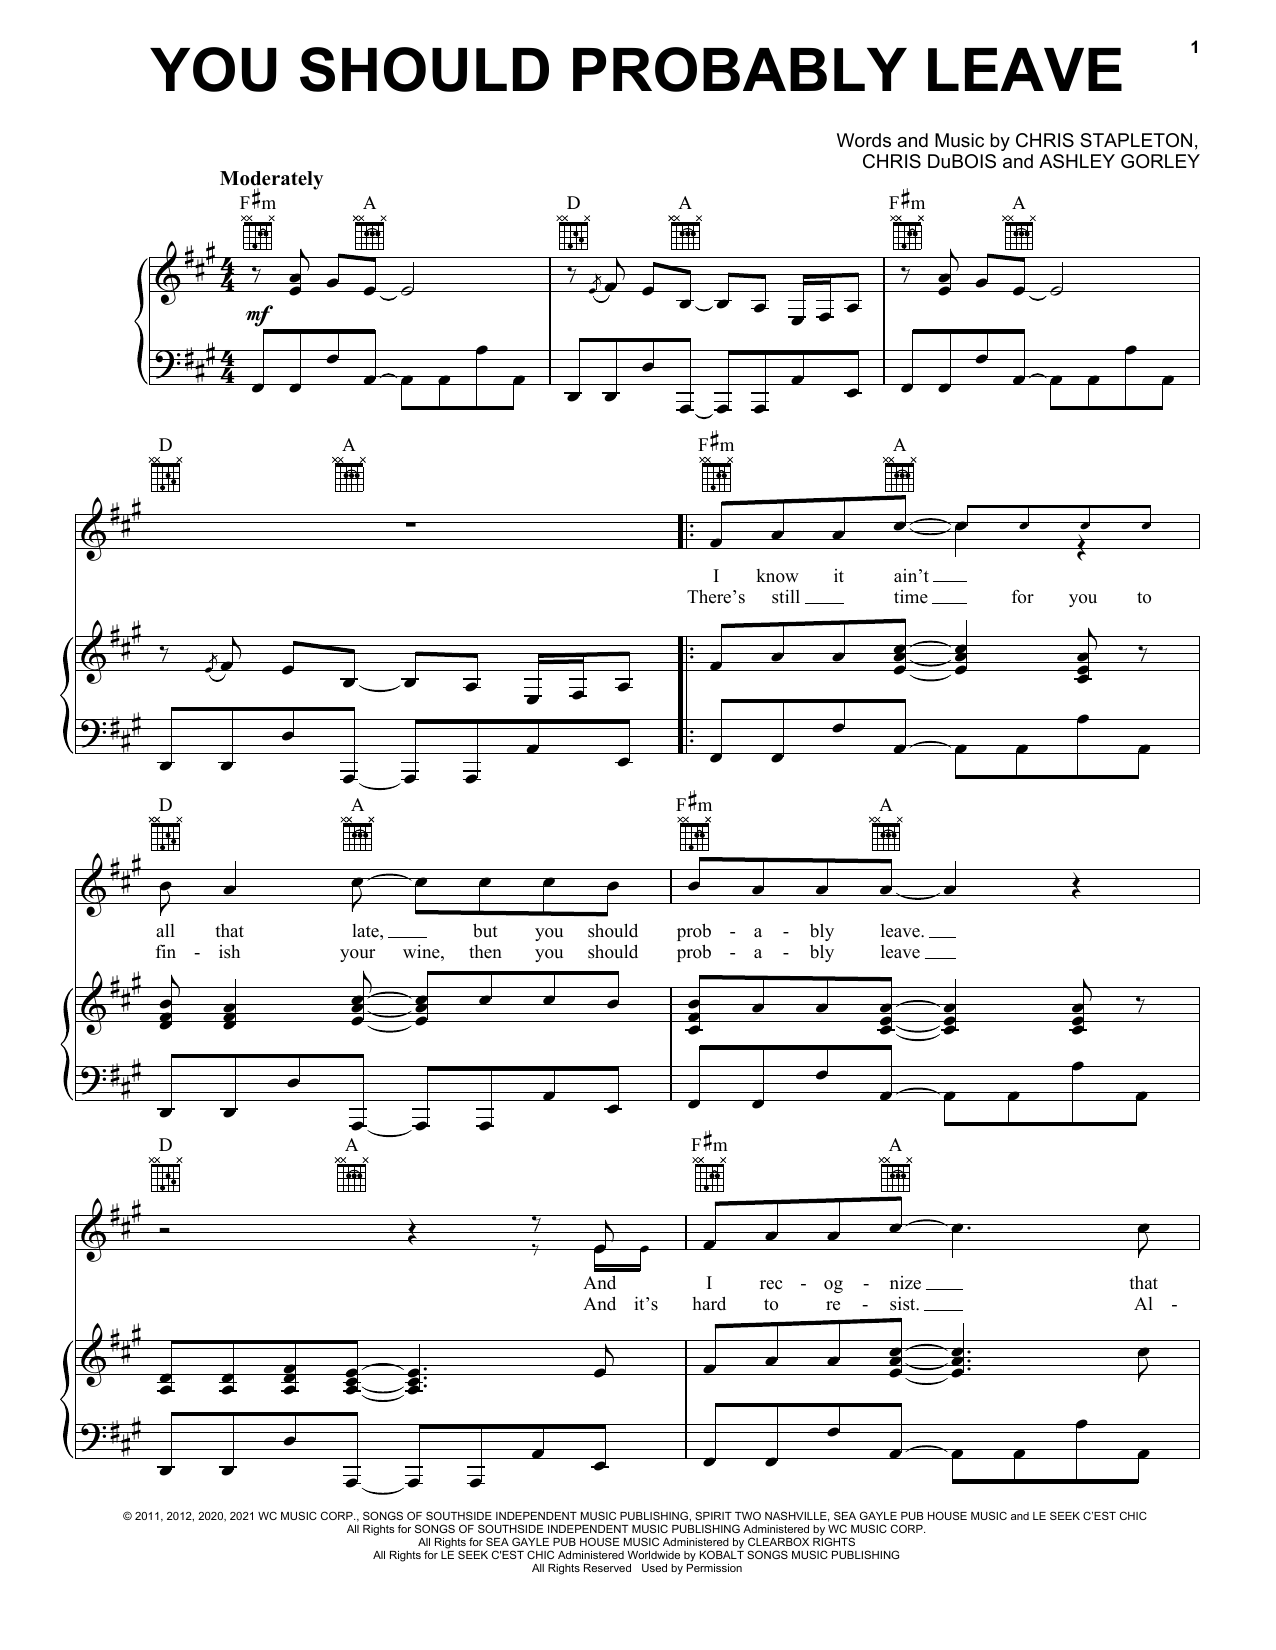 Chris Stapleton You Should Probably Leave Sheet Music Notes & Chords for Ukulele - Download or Print PDF